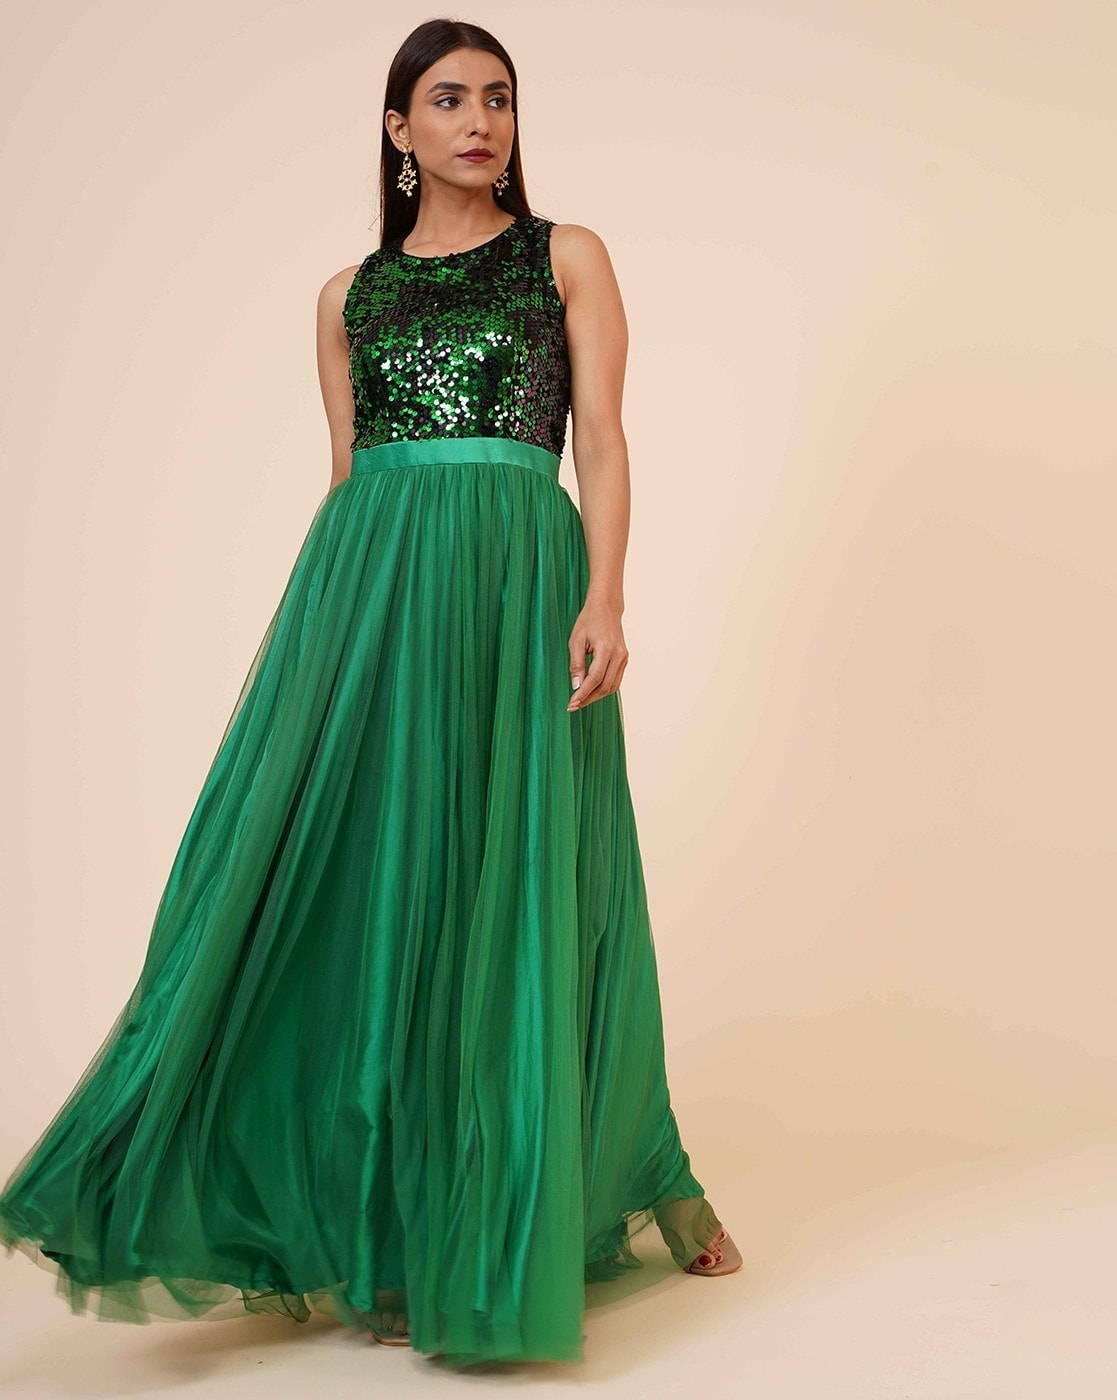 Shop Kids Green Frock Online in India | Princess Gown for Girl Online –  www.liandli.in